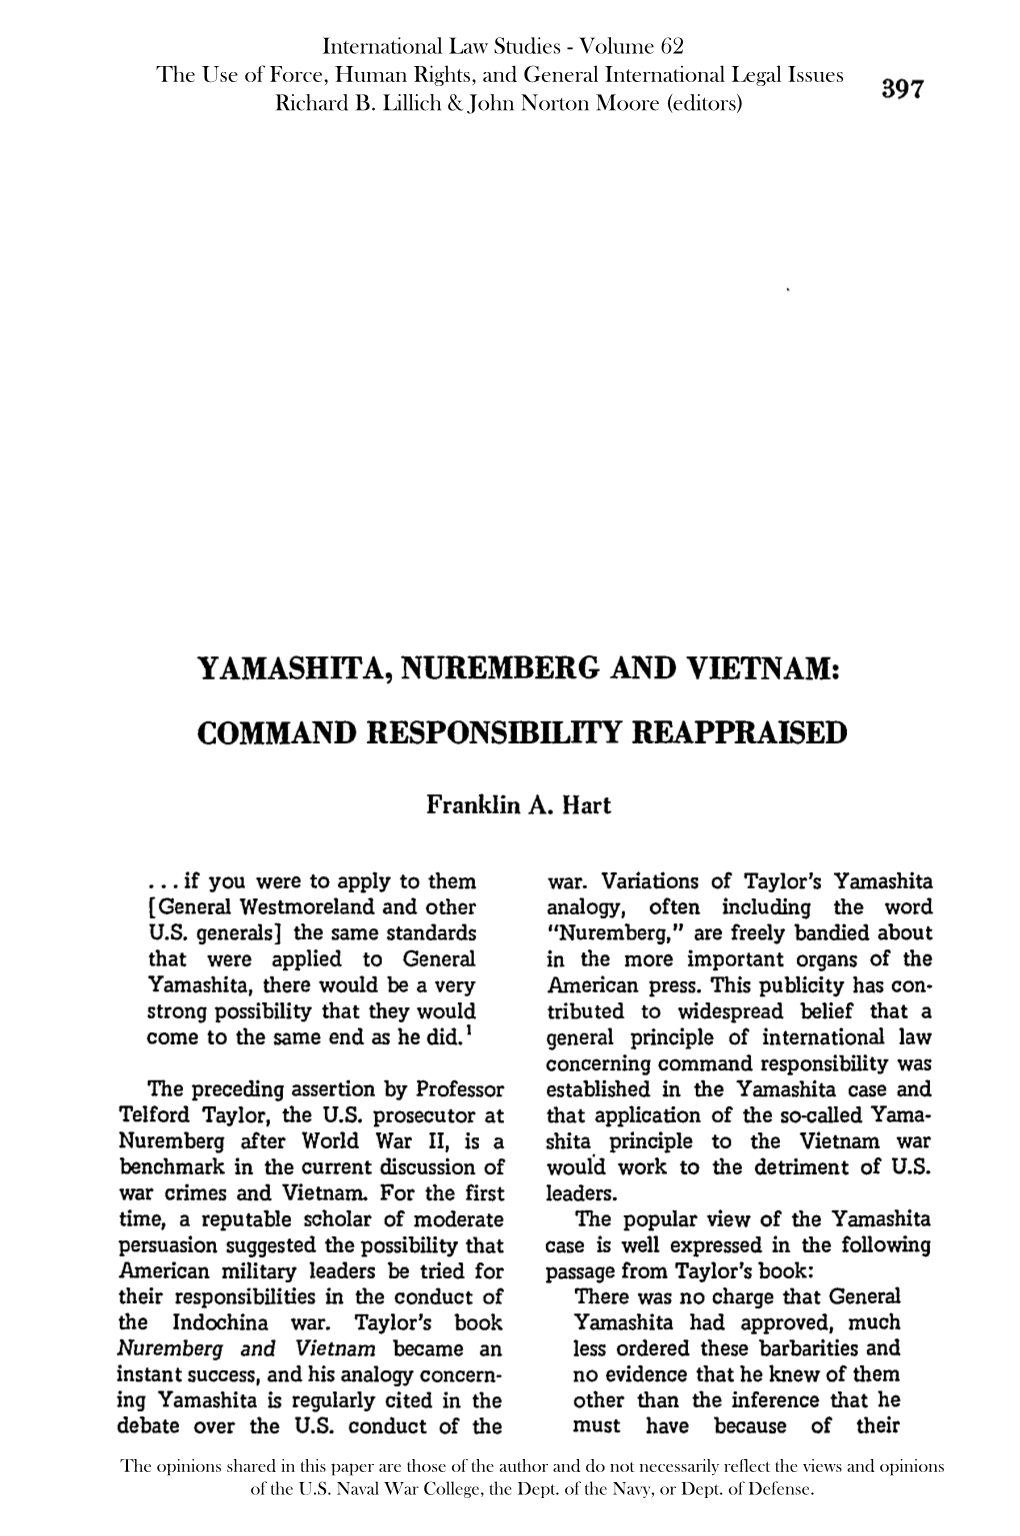 Yamashita, Nuremberg and Vietnam: Command Responsibility Reappraised